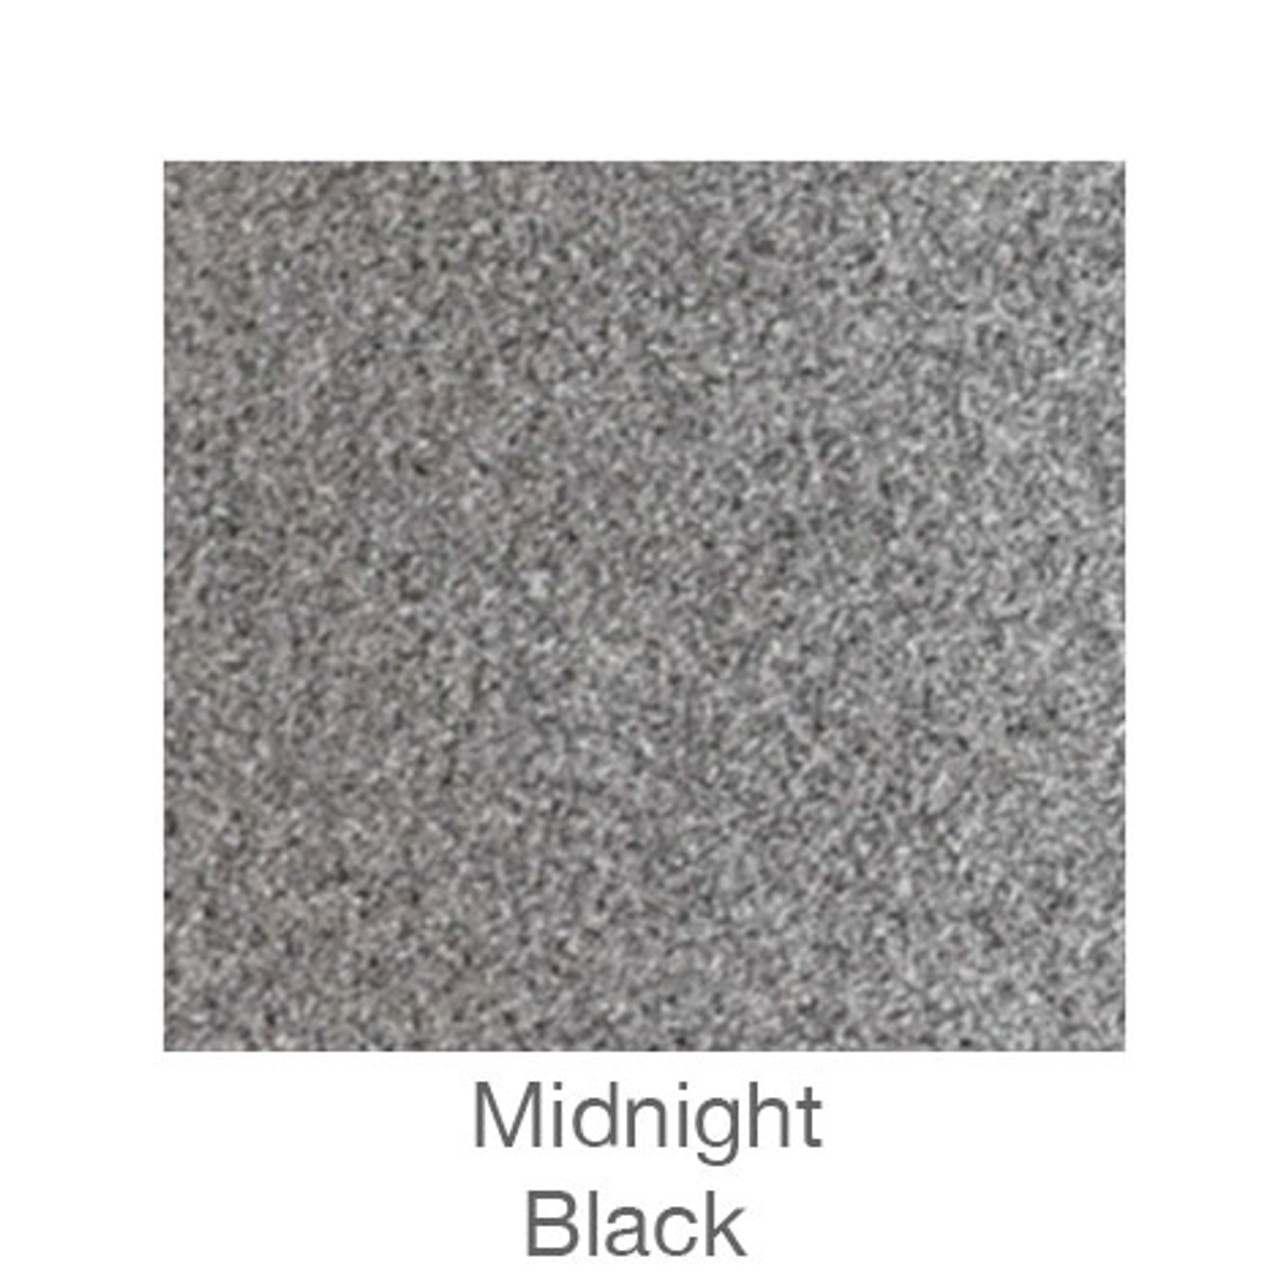 Sparkle Midnight Black HTV - 12x12 sheet